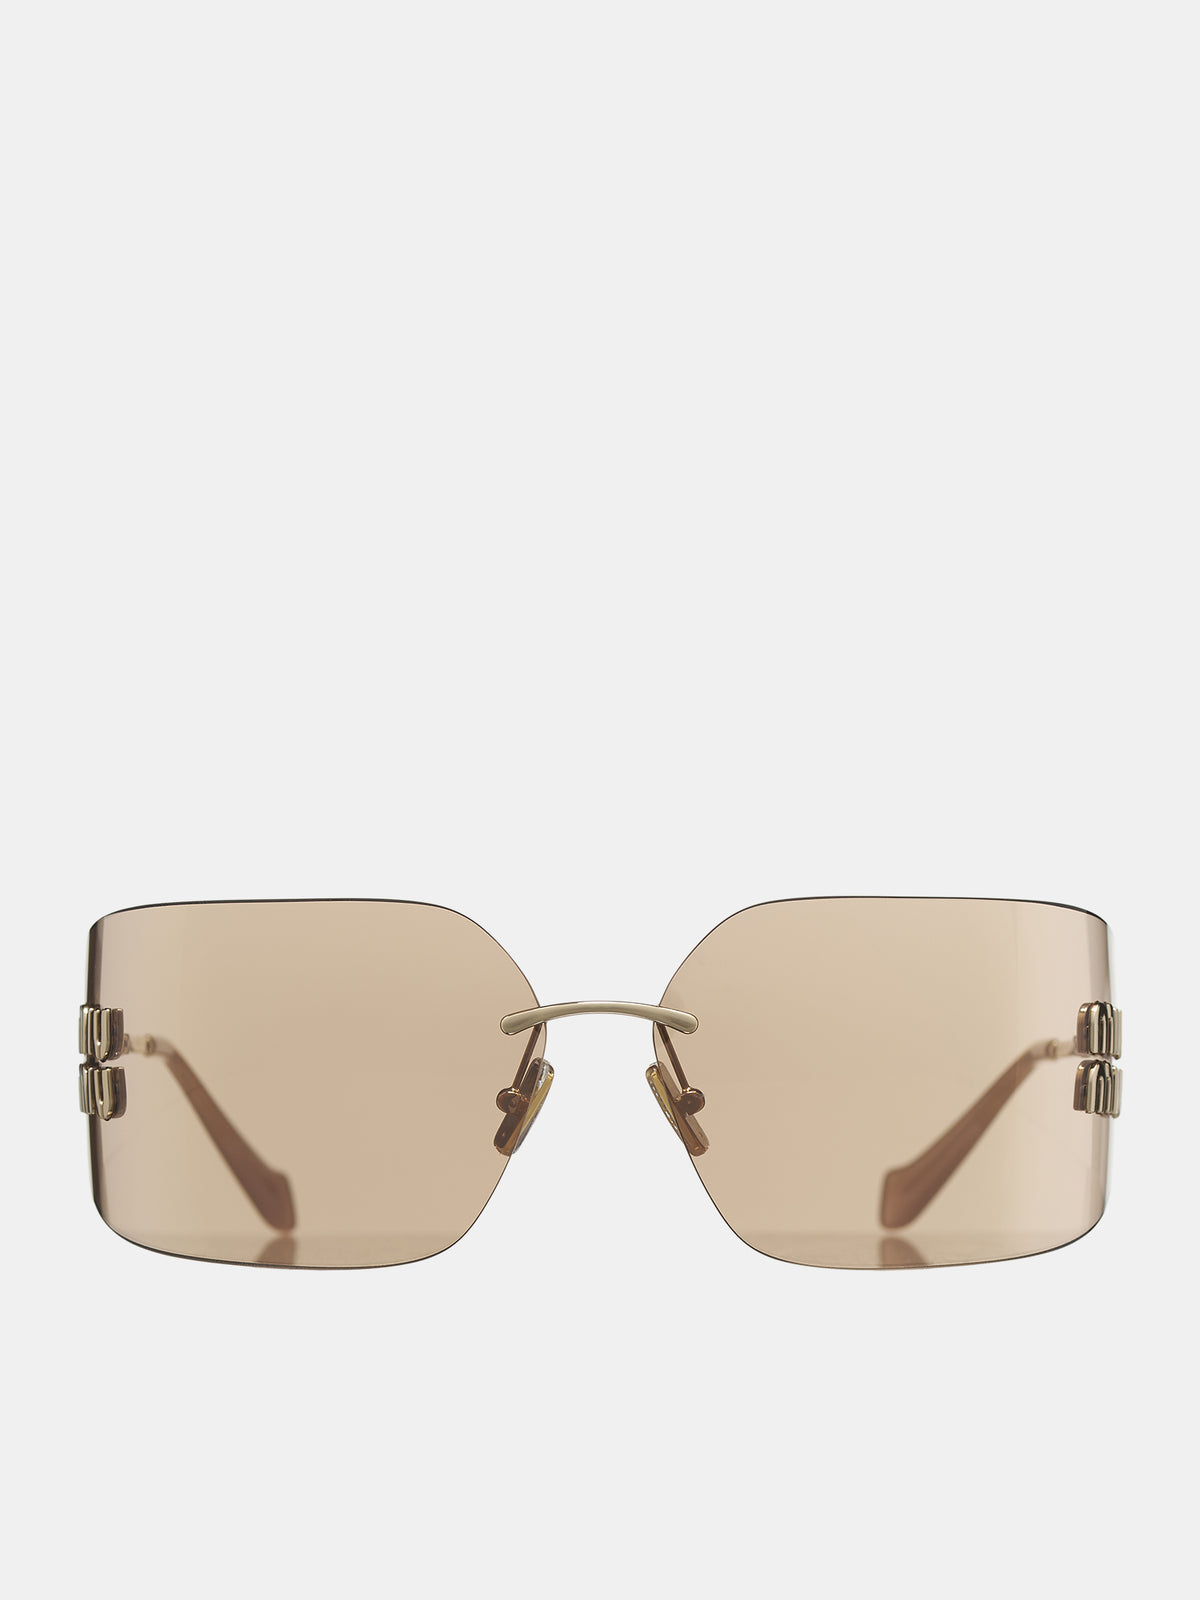 Wraparound Mirror Sunglasses (0MU-54YS-PALE-GOLD-PINK-MIRROR)